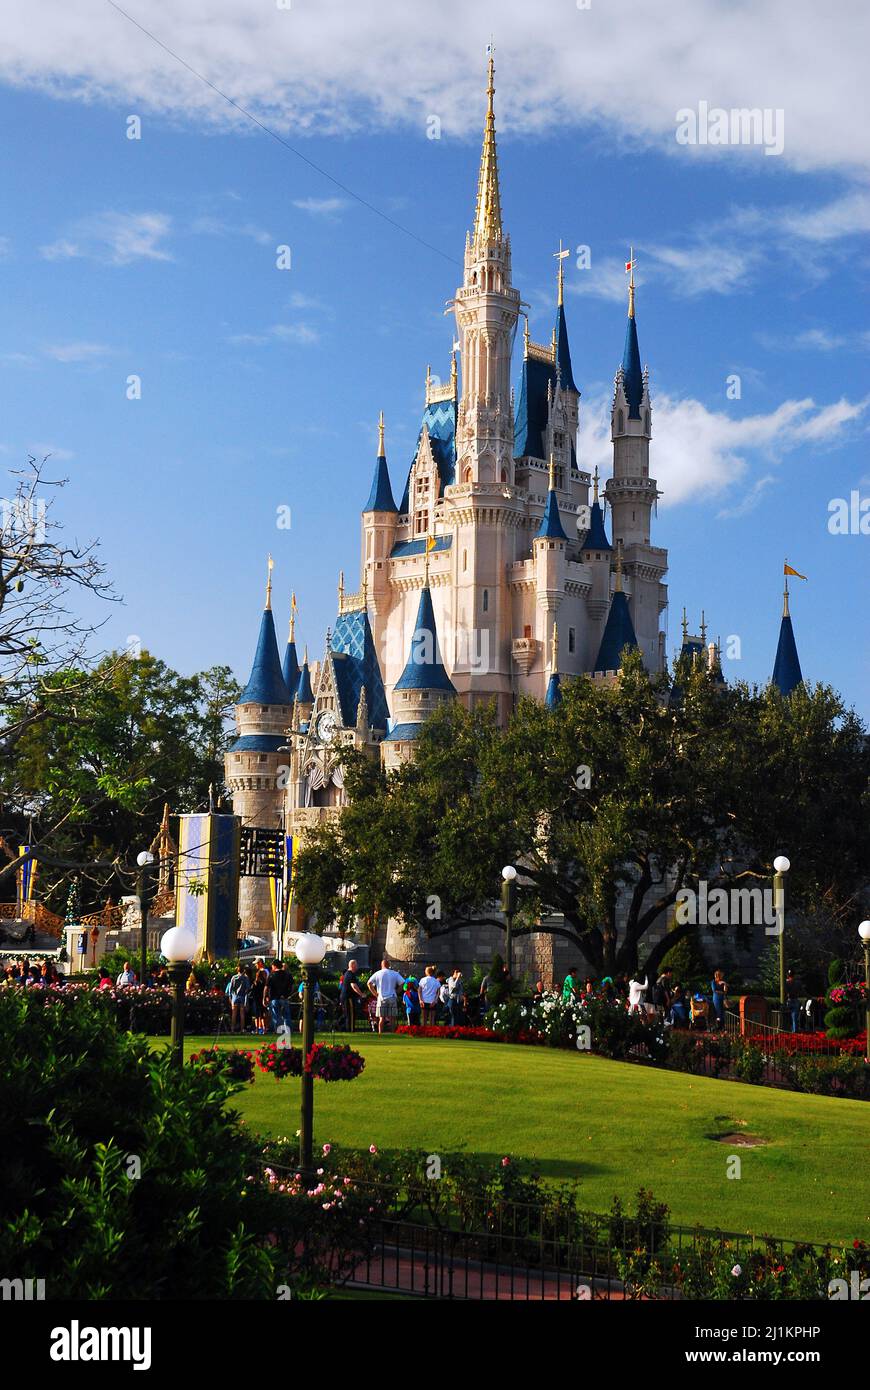 Cinderella’s Castle rises over the crowd in Disney World Stock Photo